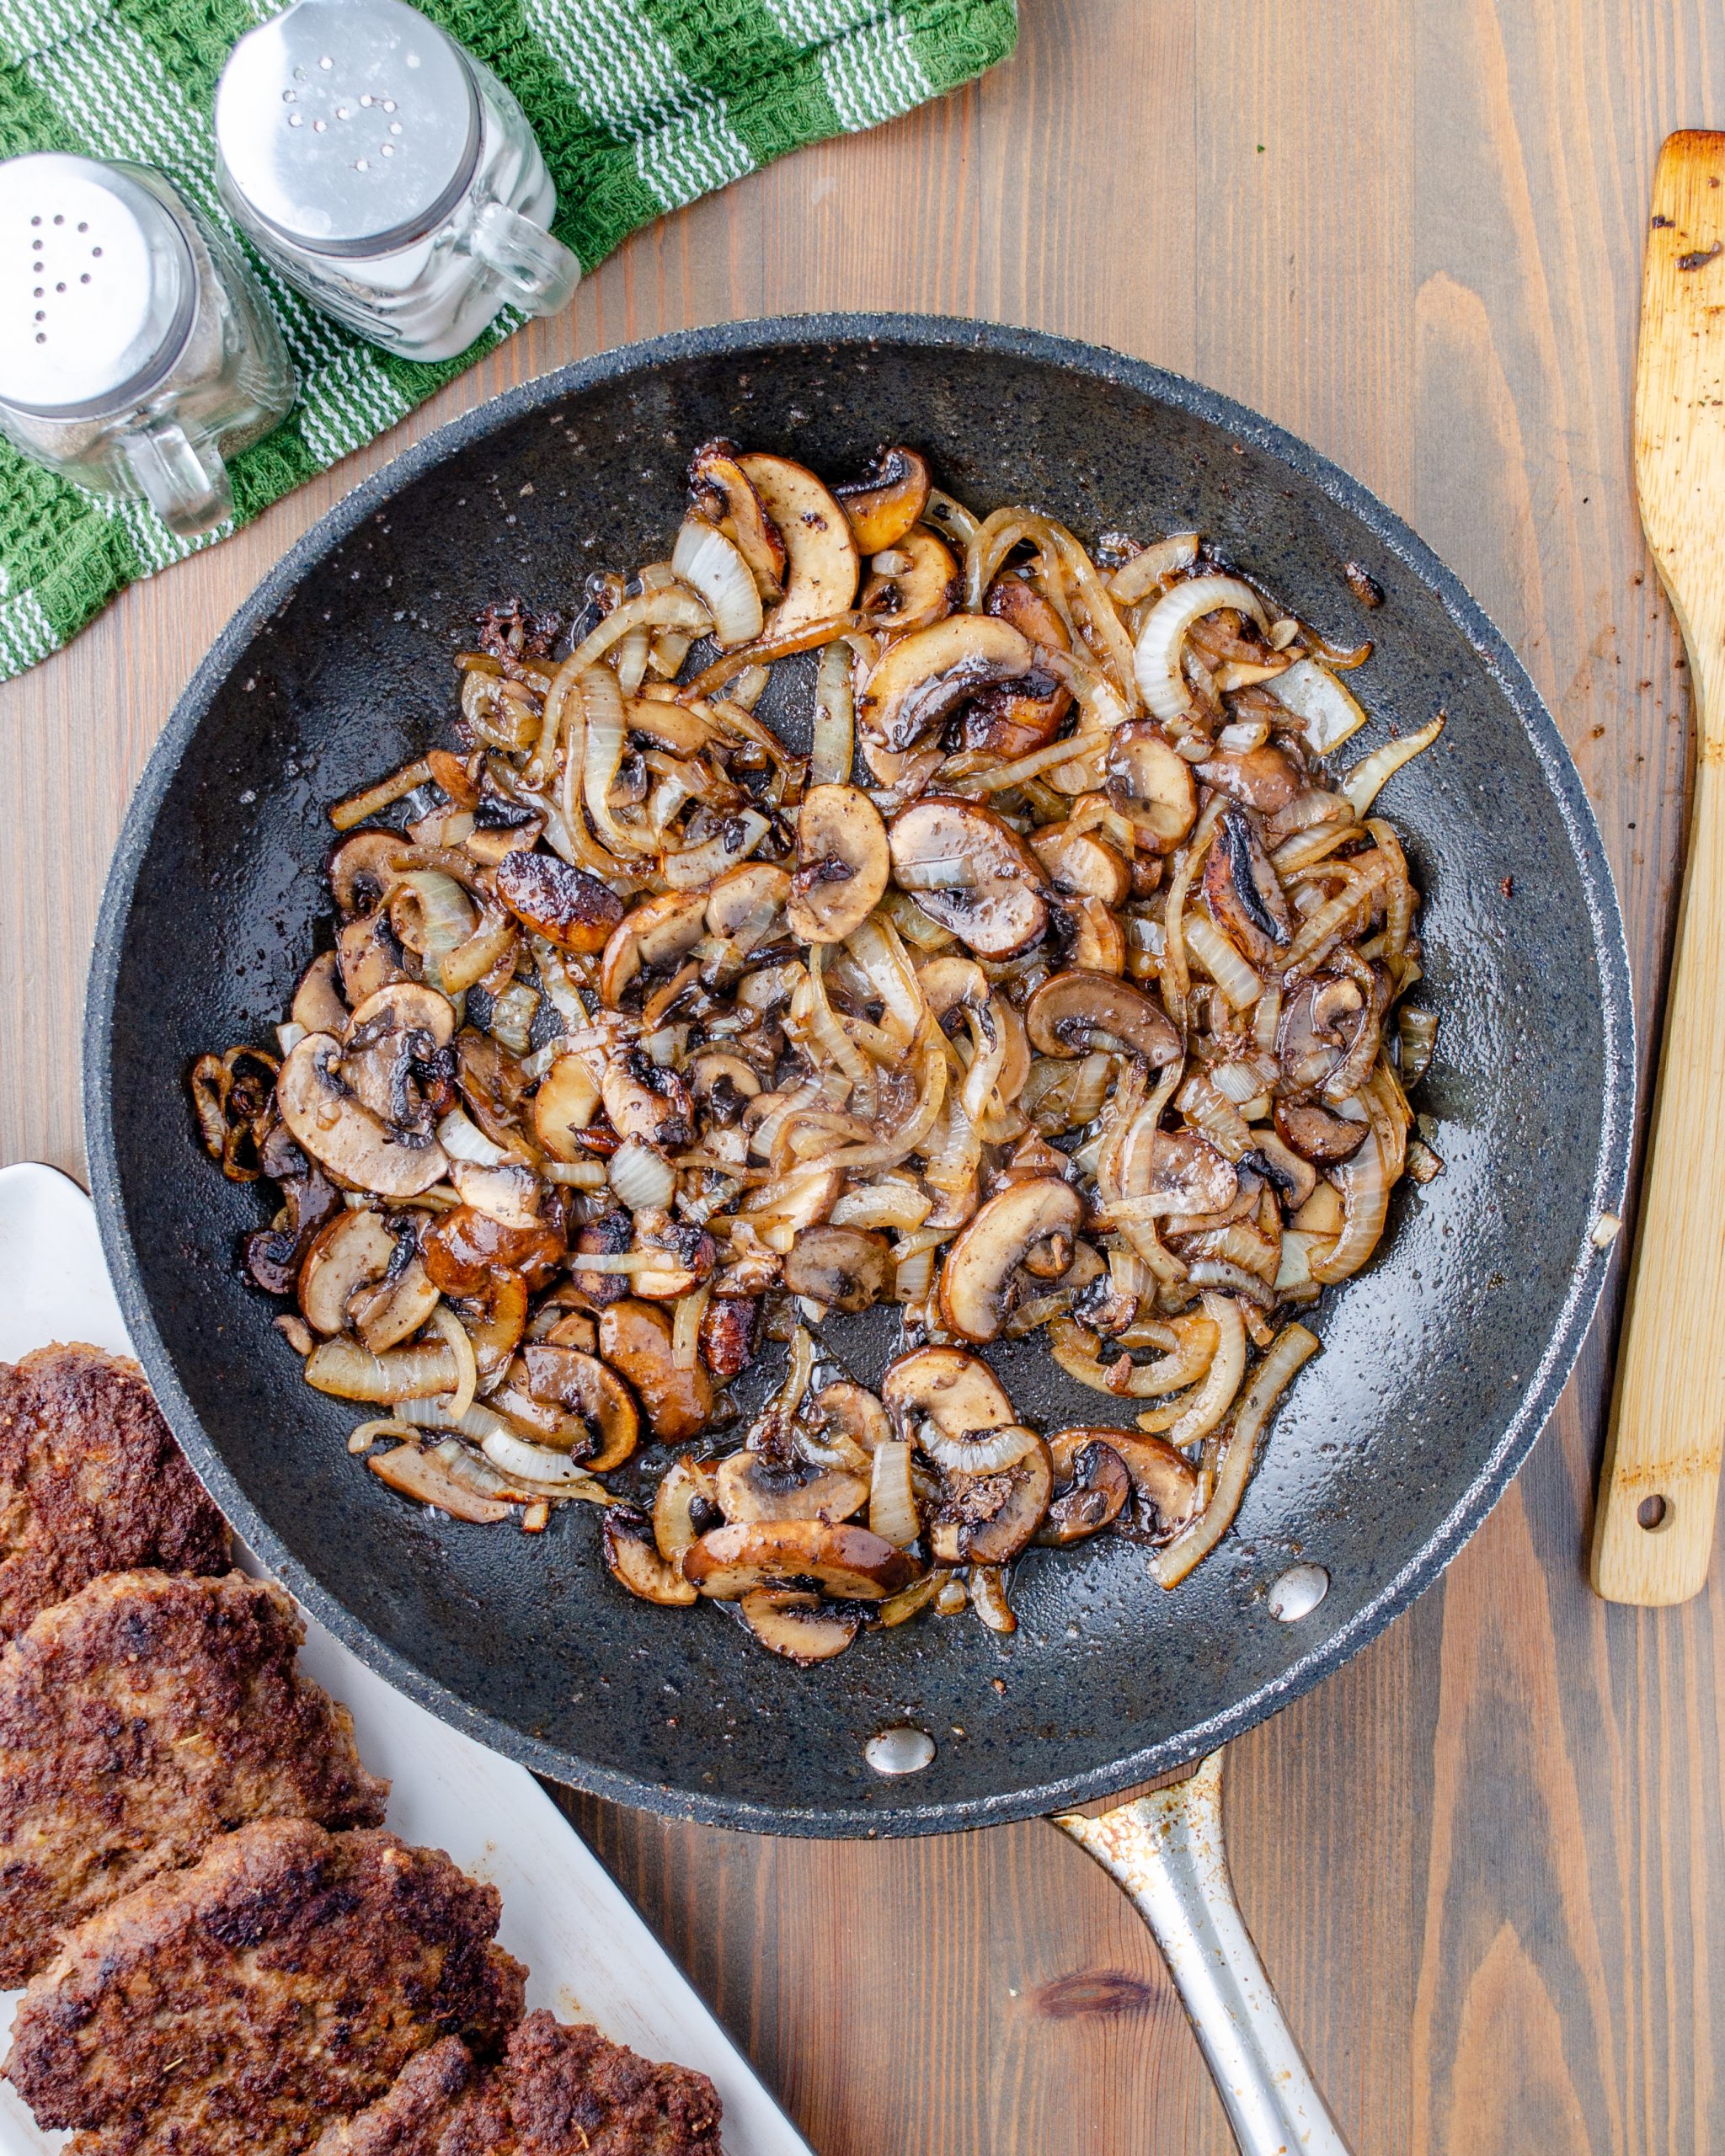 Cook the onion mushroom mixture until golden brown.